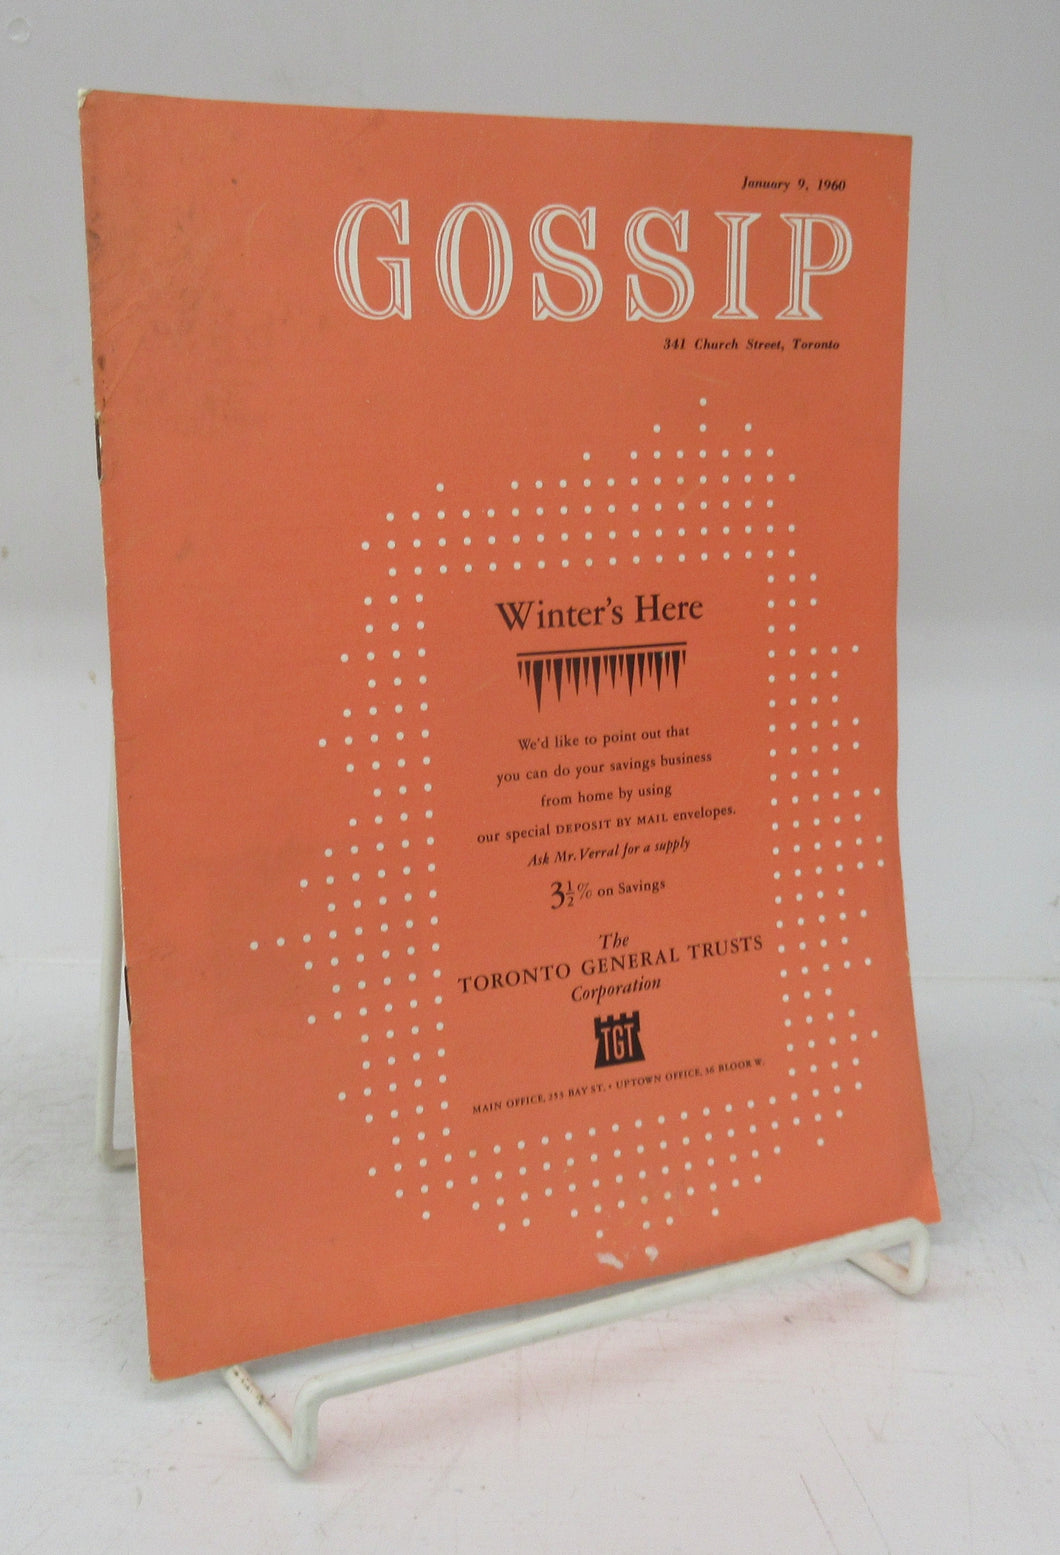 Gossip! January 9, 1960